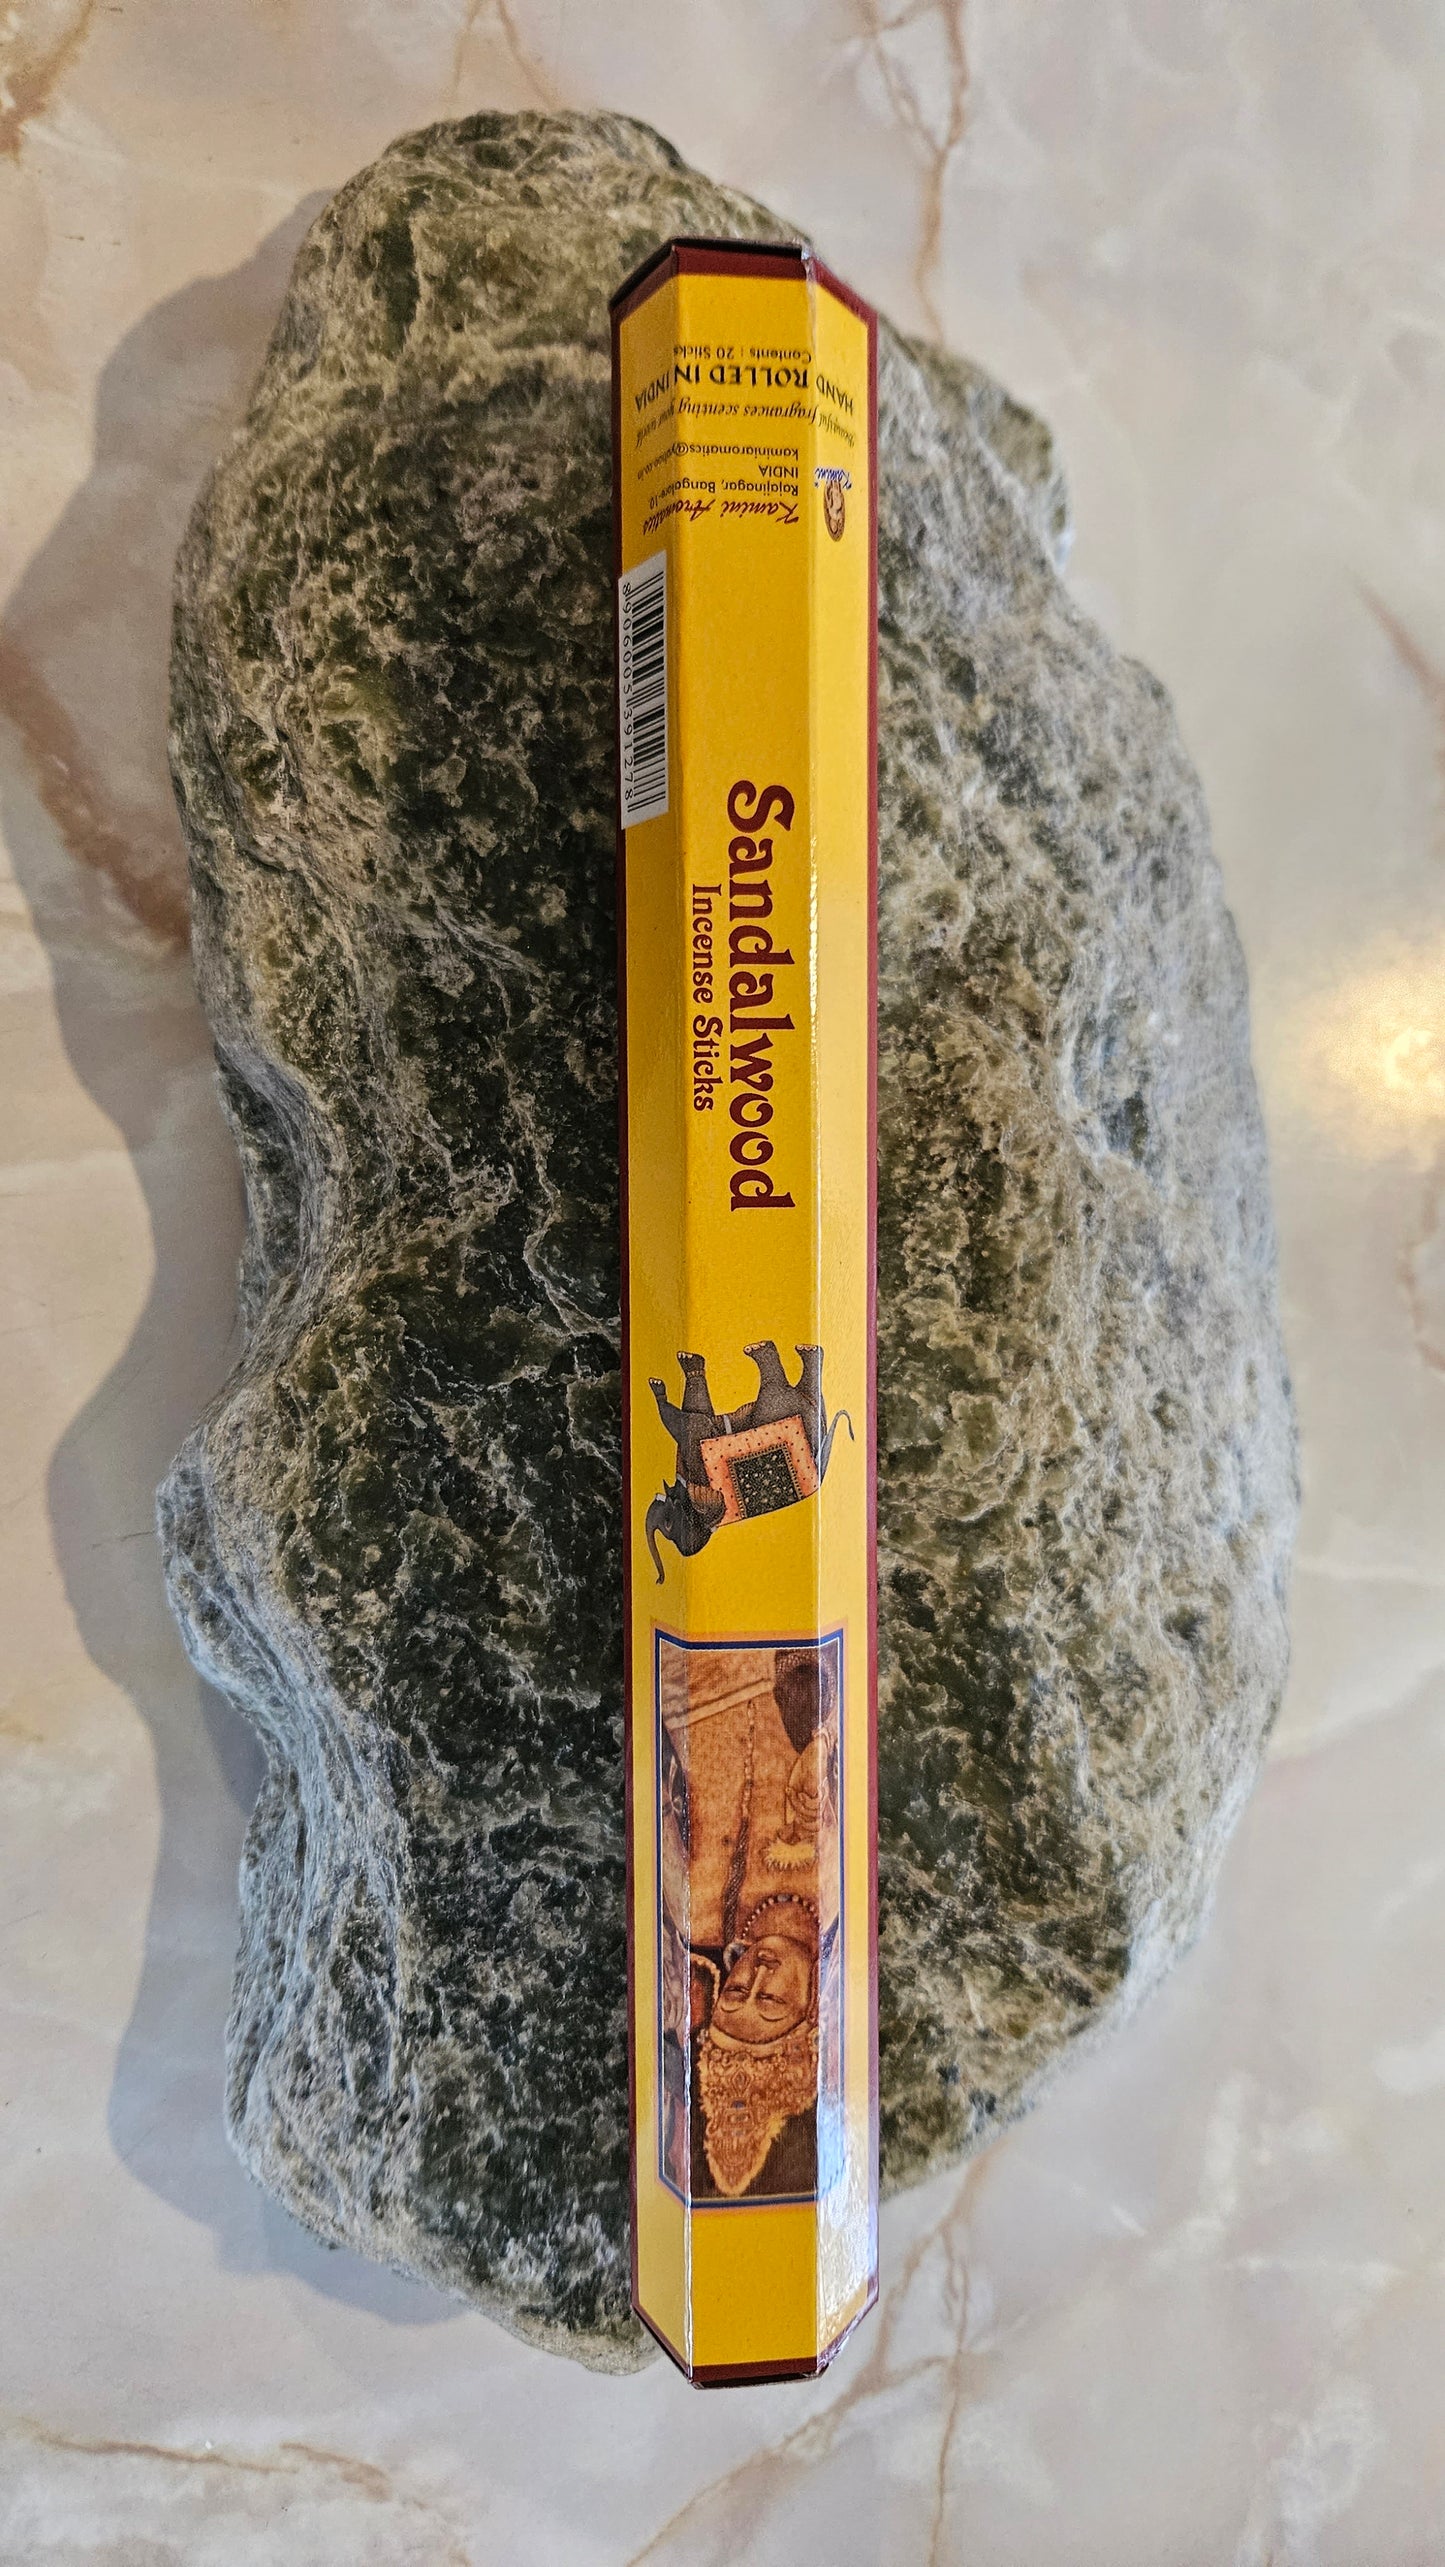 Kamini Sandalwood Incense, pack of 20 incense sticks, hand rolled in India, 20 gram sticks, 250mm long